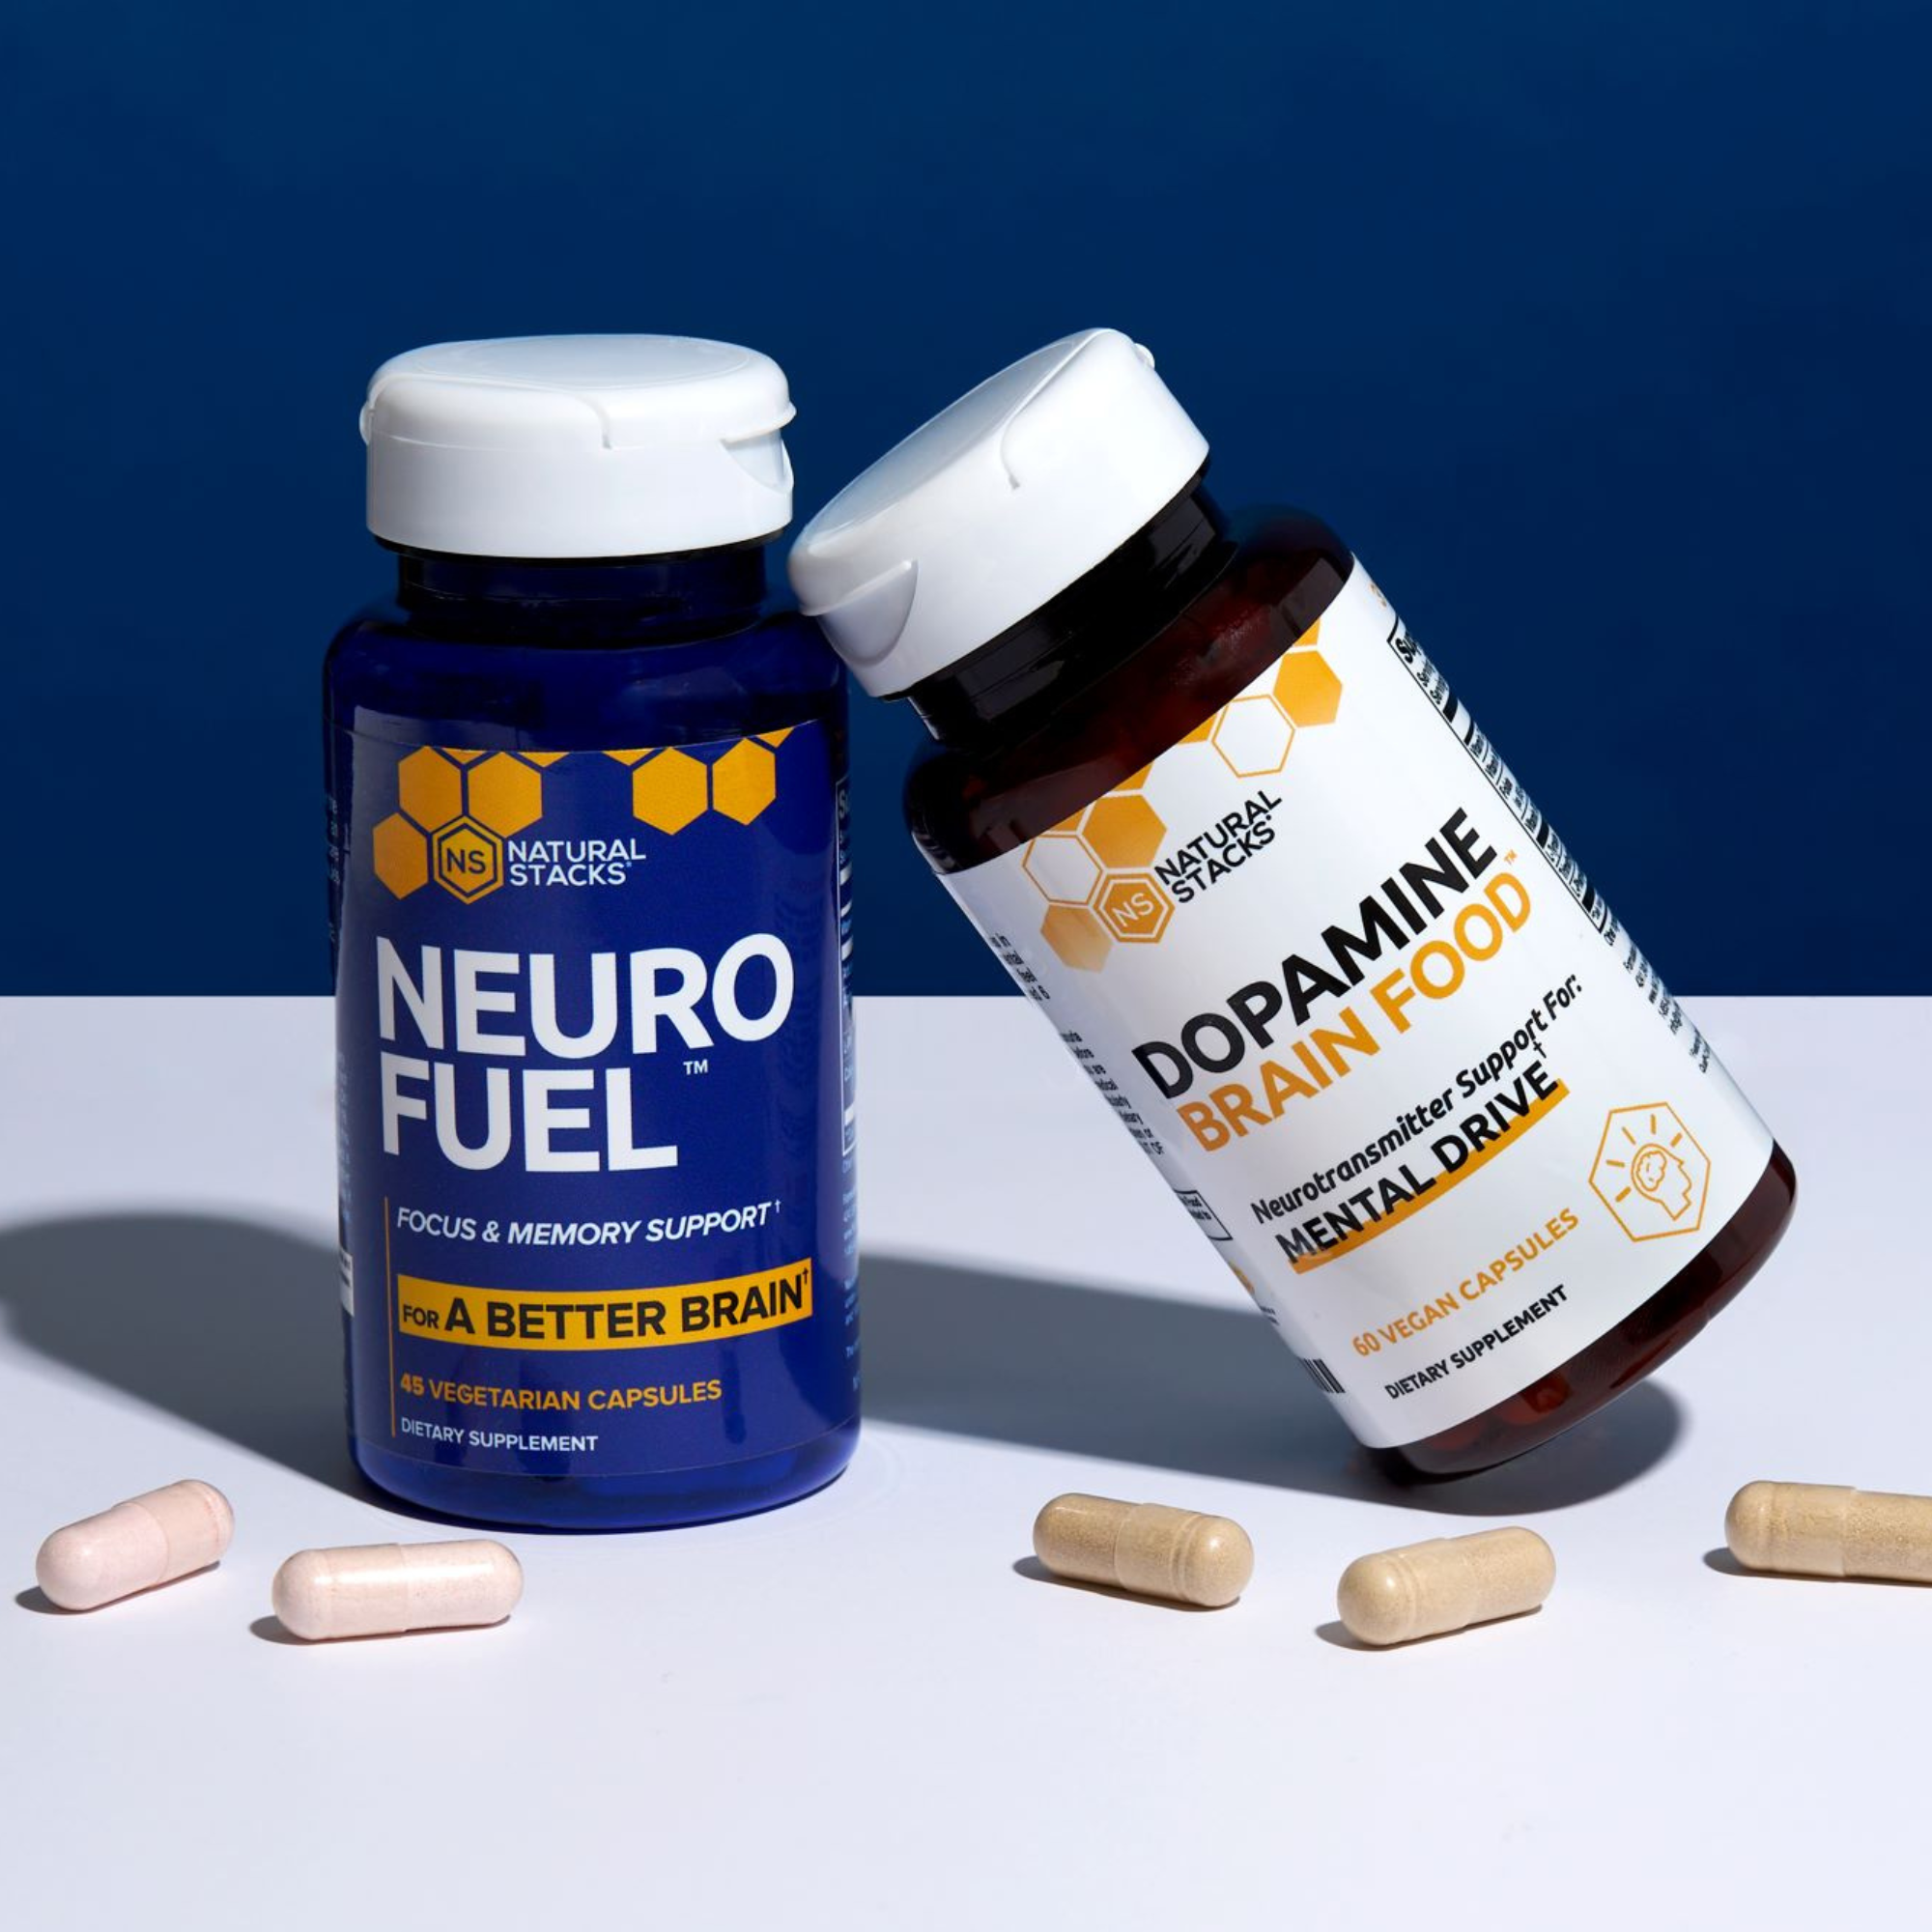 Neurofuel and dopamine bottles